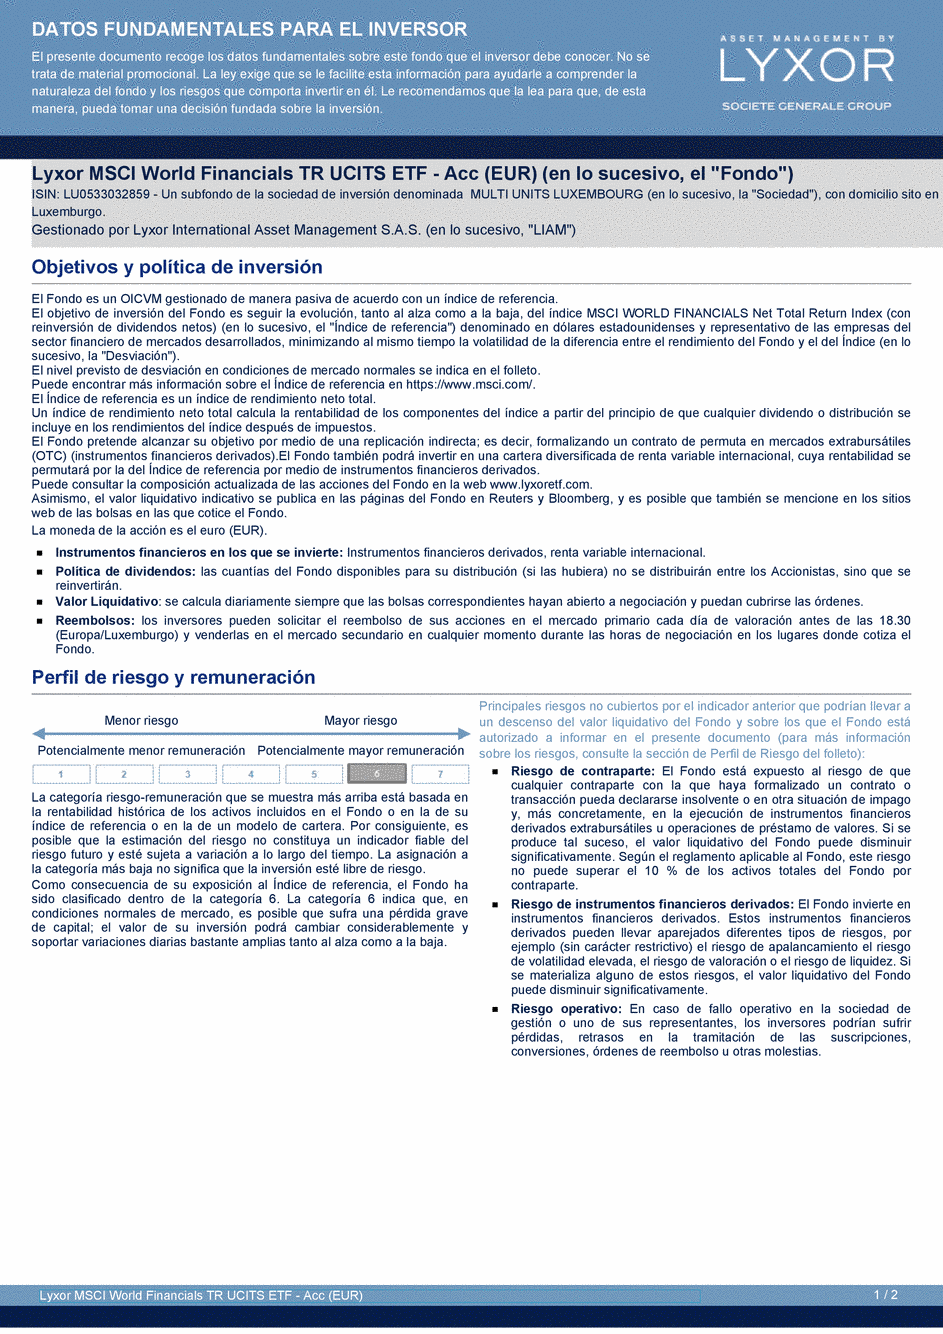 DICI Lyxor MSCI World Financials TR UCITS ETF - Acc (EUR) - 10/07/2020 - Spanish